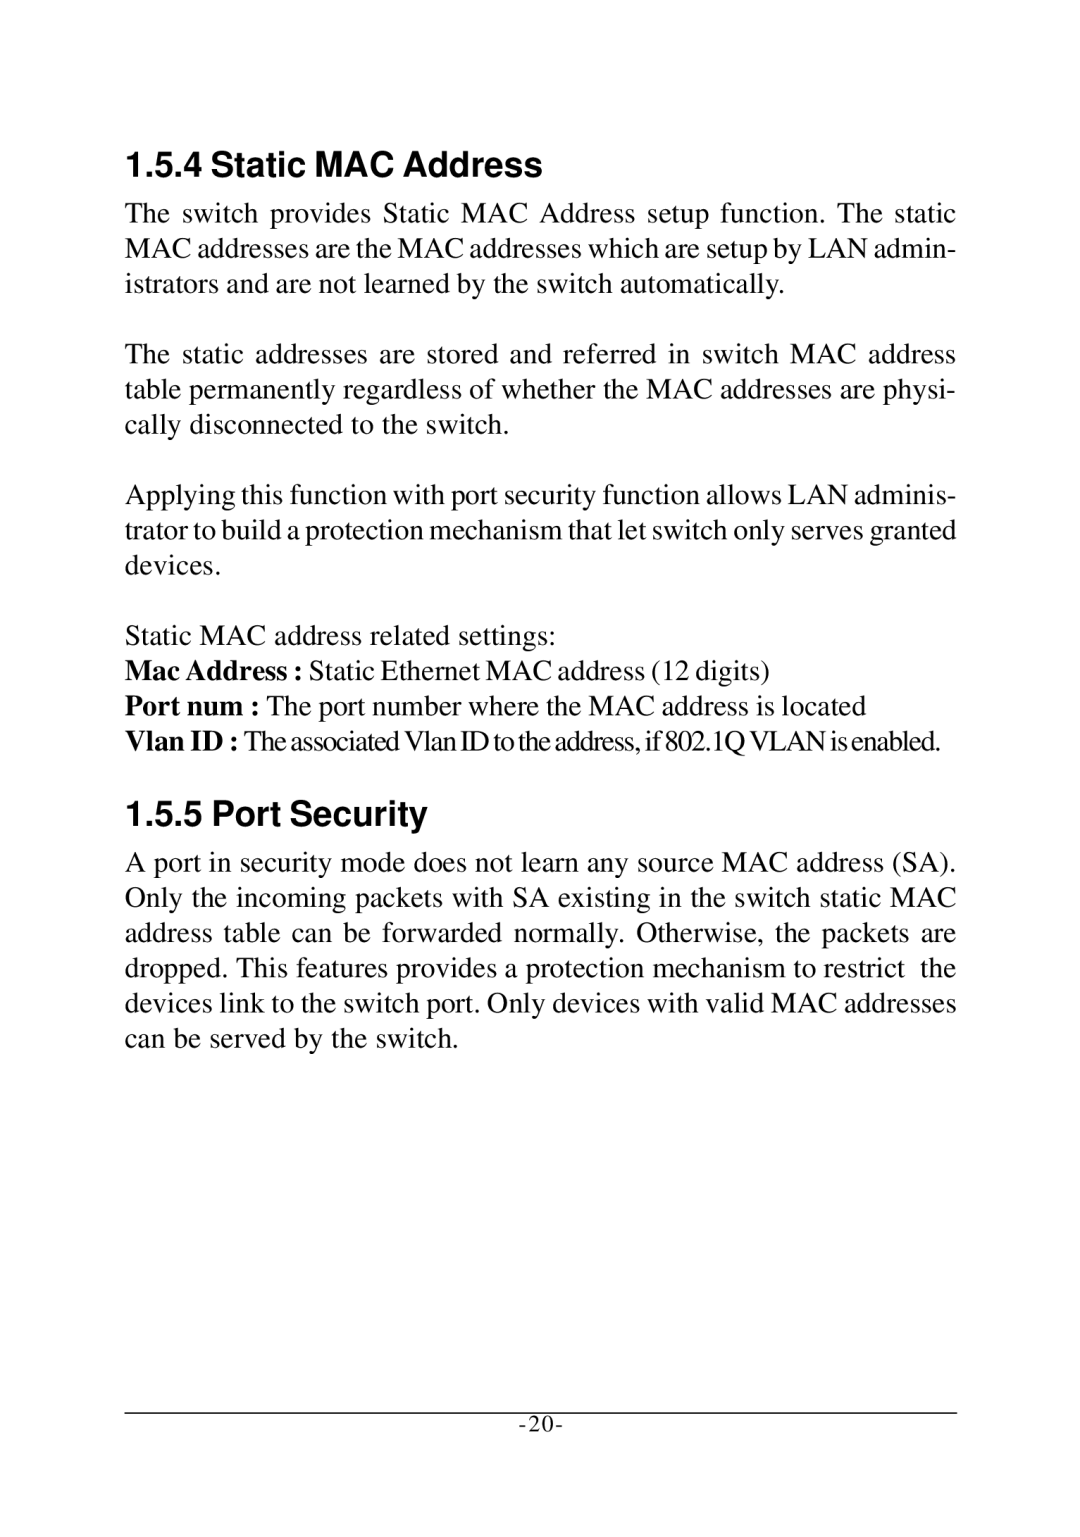 KTI Networks KS-2260 operation manual Static MAC Address, Port Security 